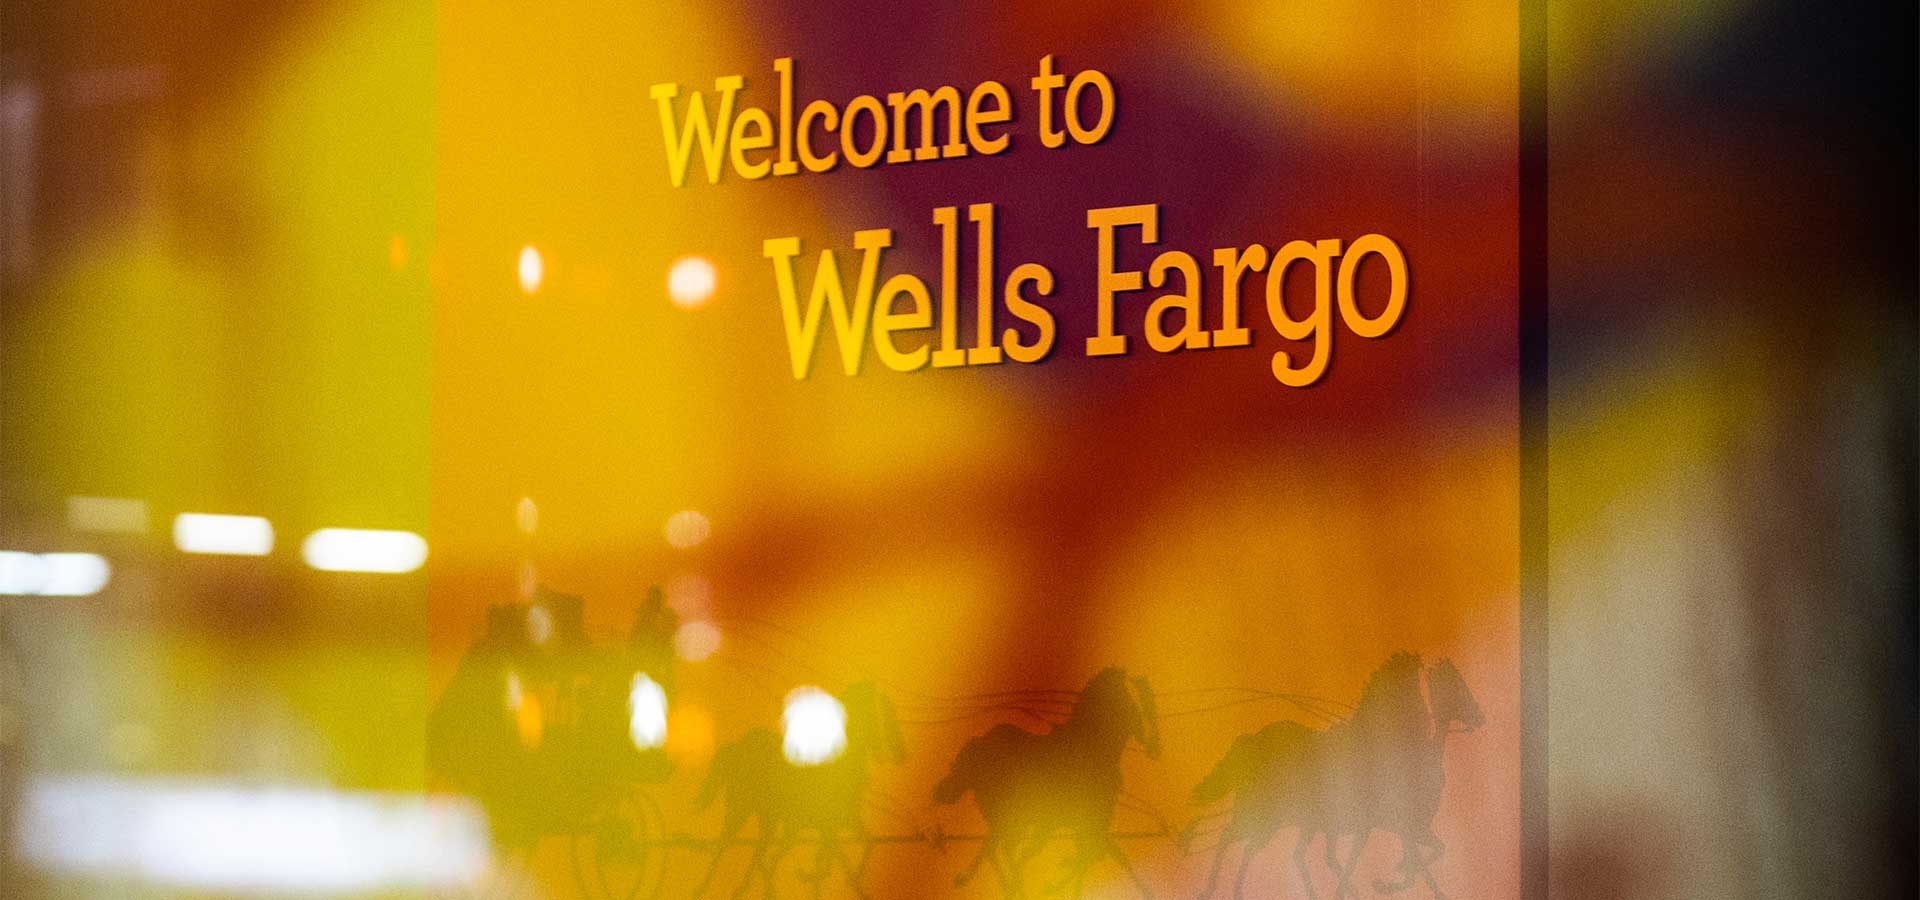 welcome to Wells Fargo tagline in window